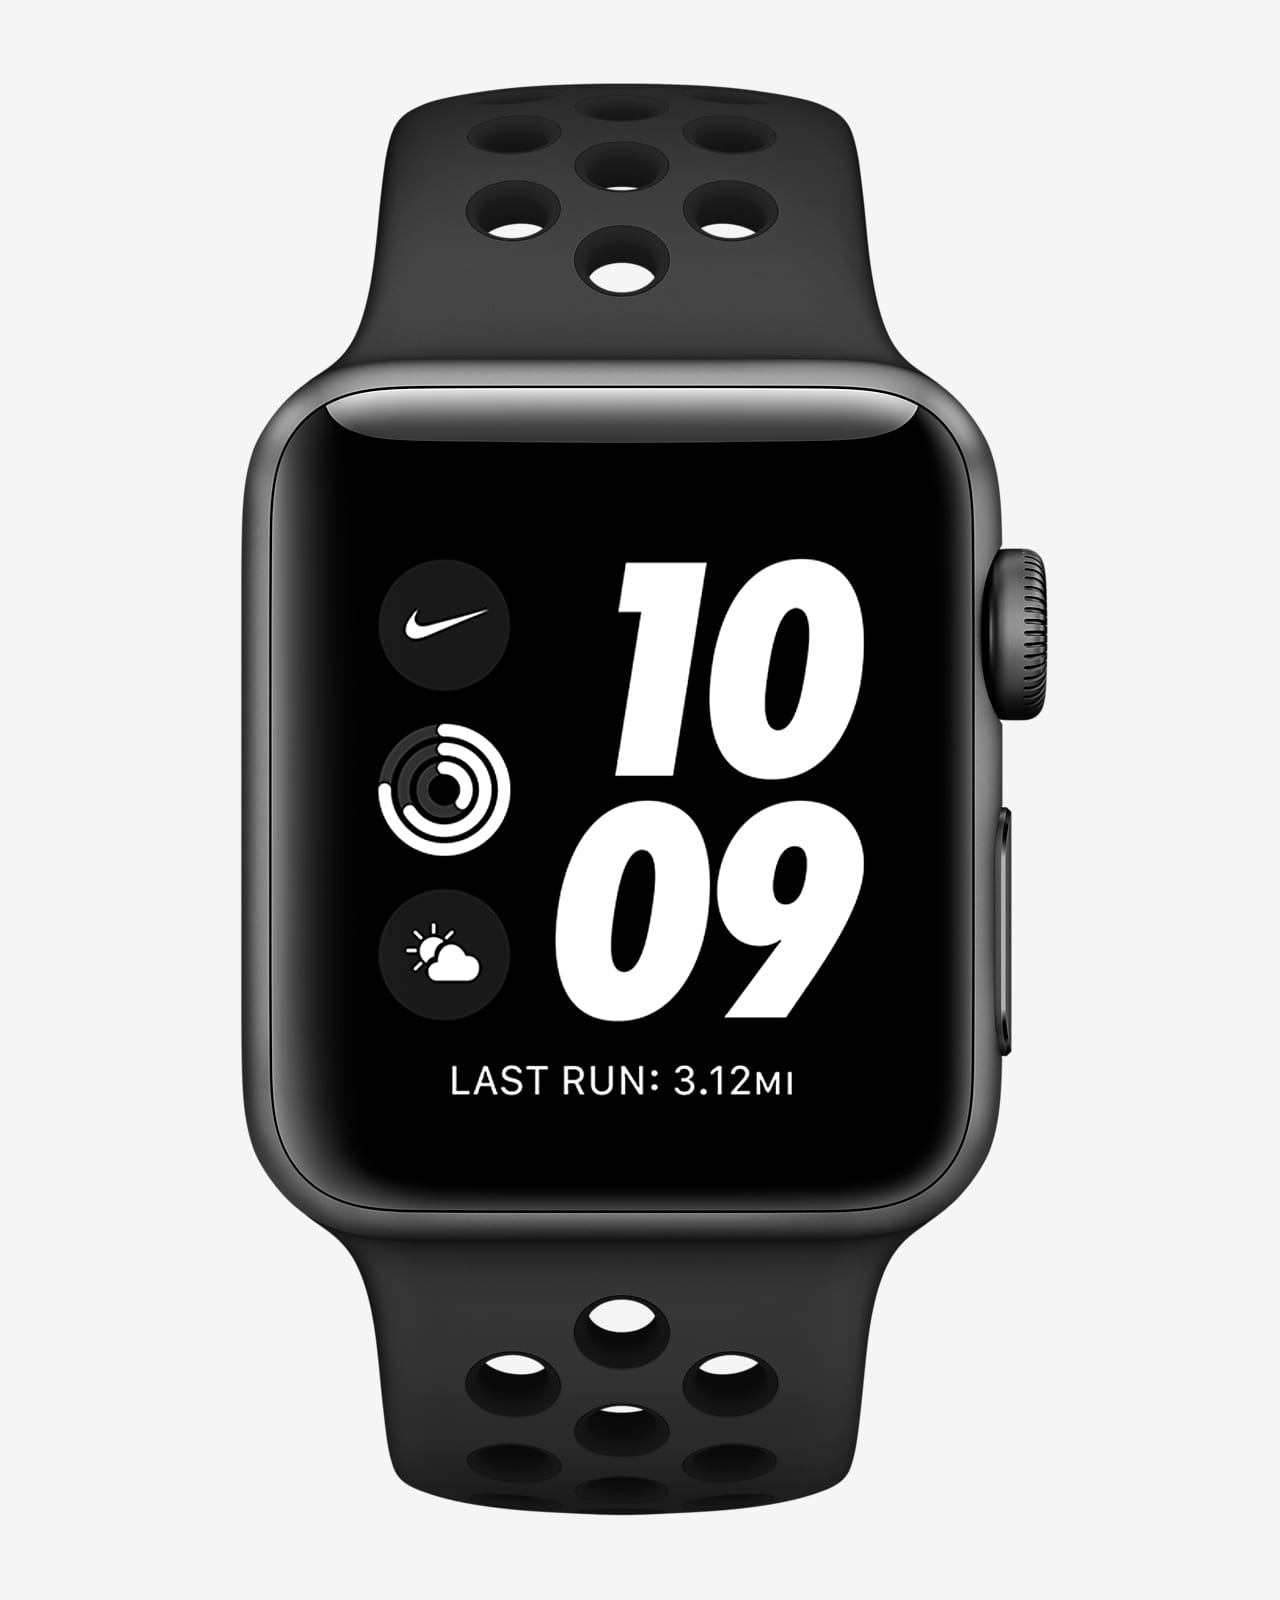 Apple Watch series3 アップルウォッチスペースグレイ 42m